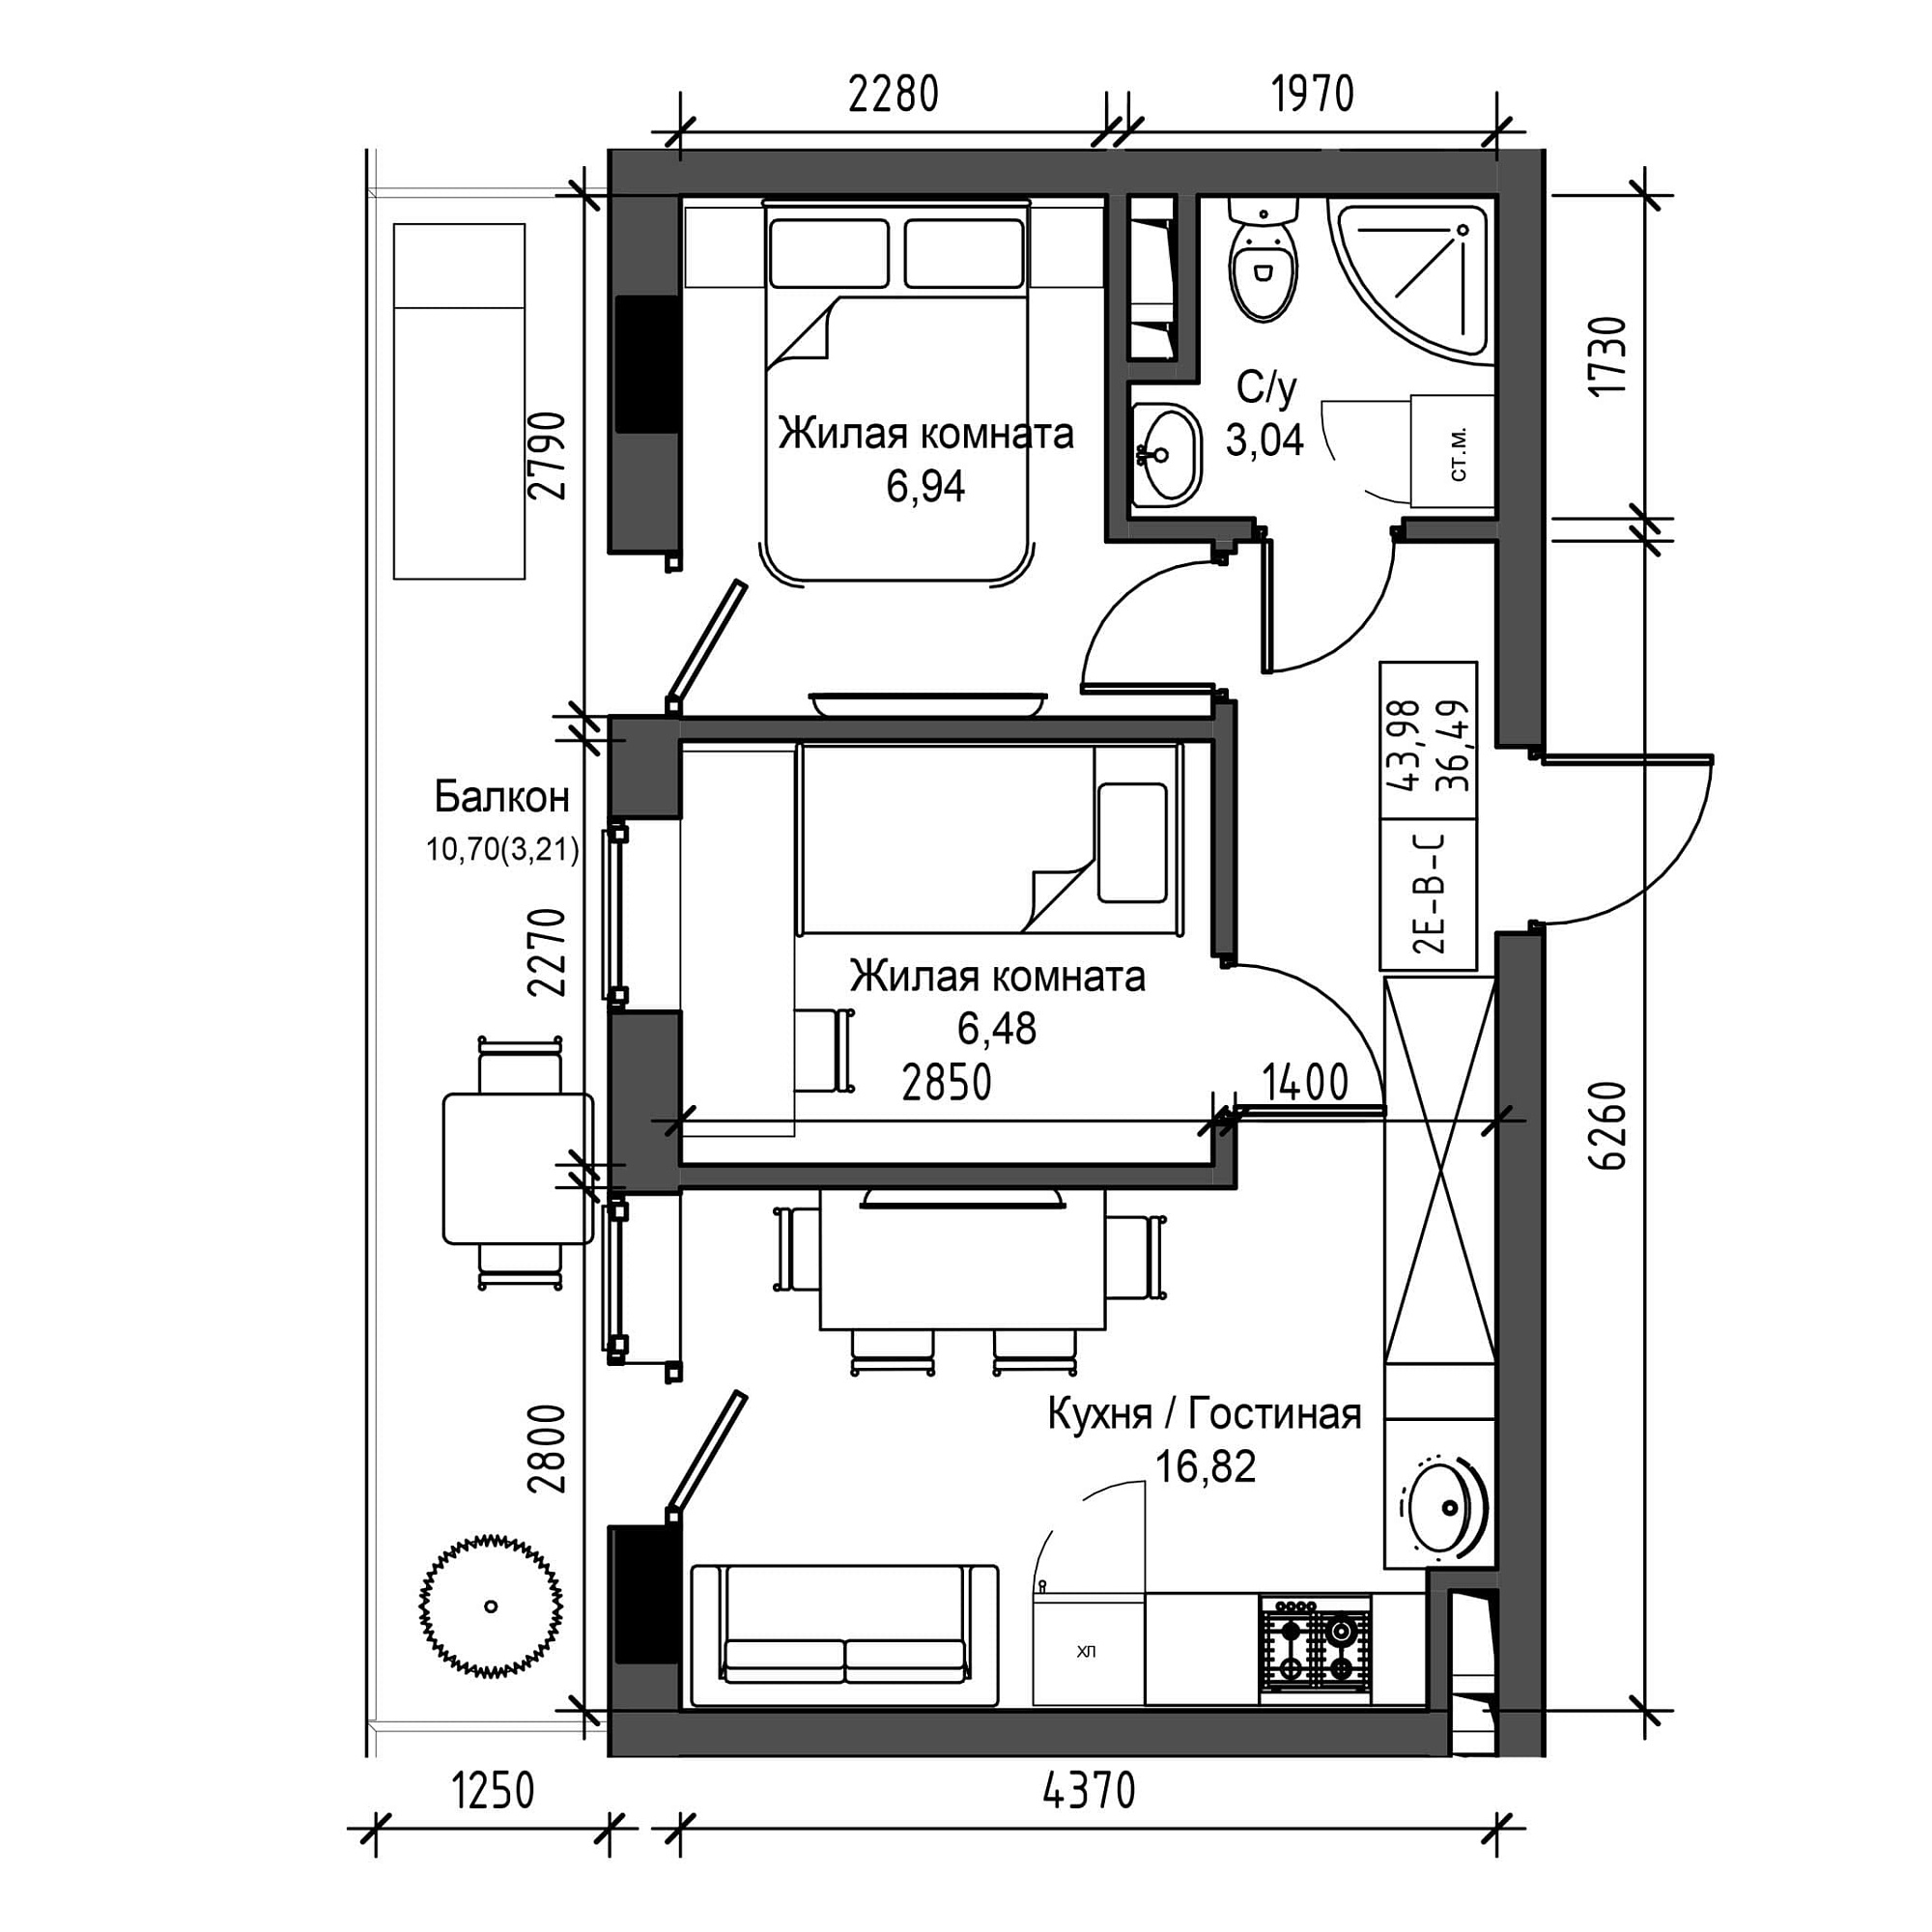 Планування 2-к квартира площею 36.49м2, UM-001-08/0017.